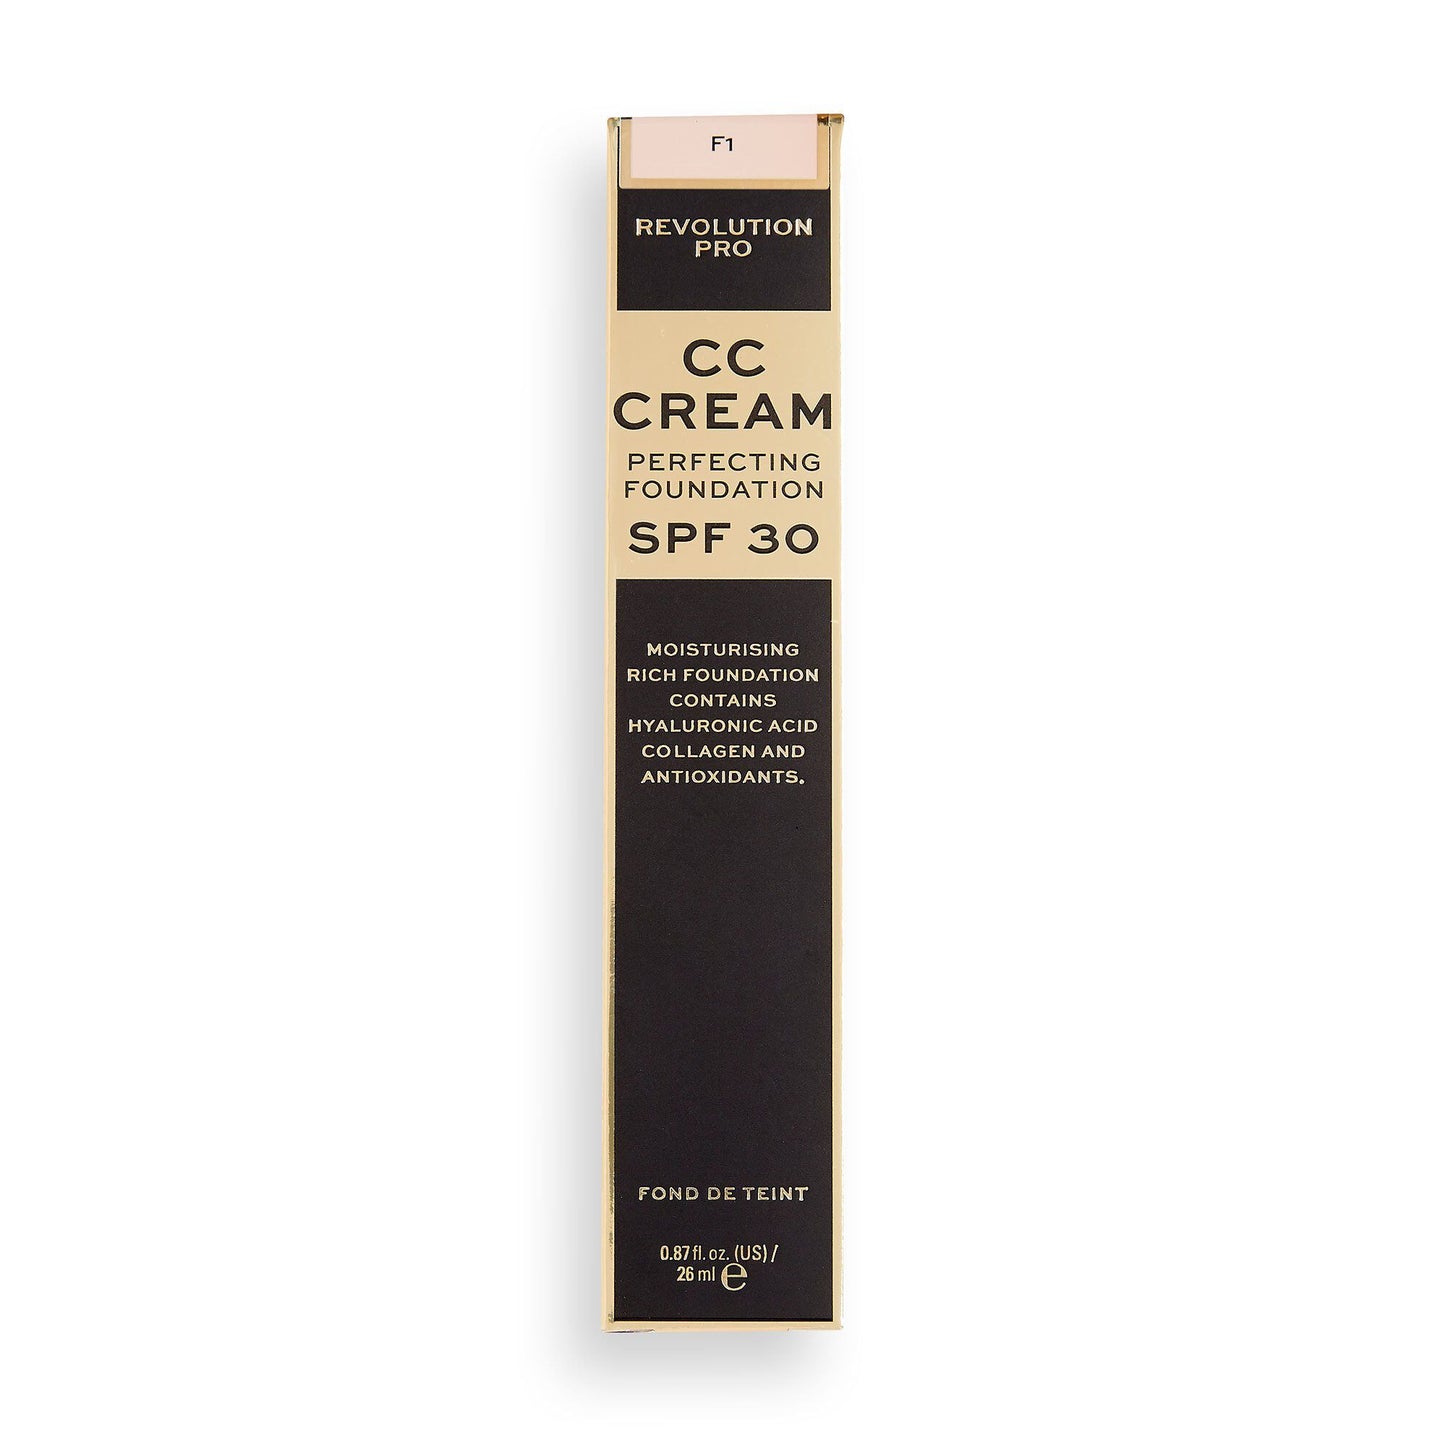 Revolution Pro CC Cream Perfecting Foundation SPF30 F1